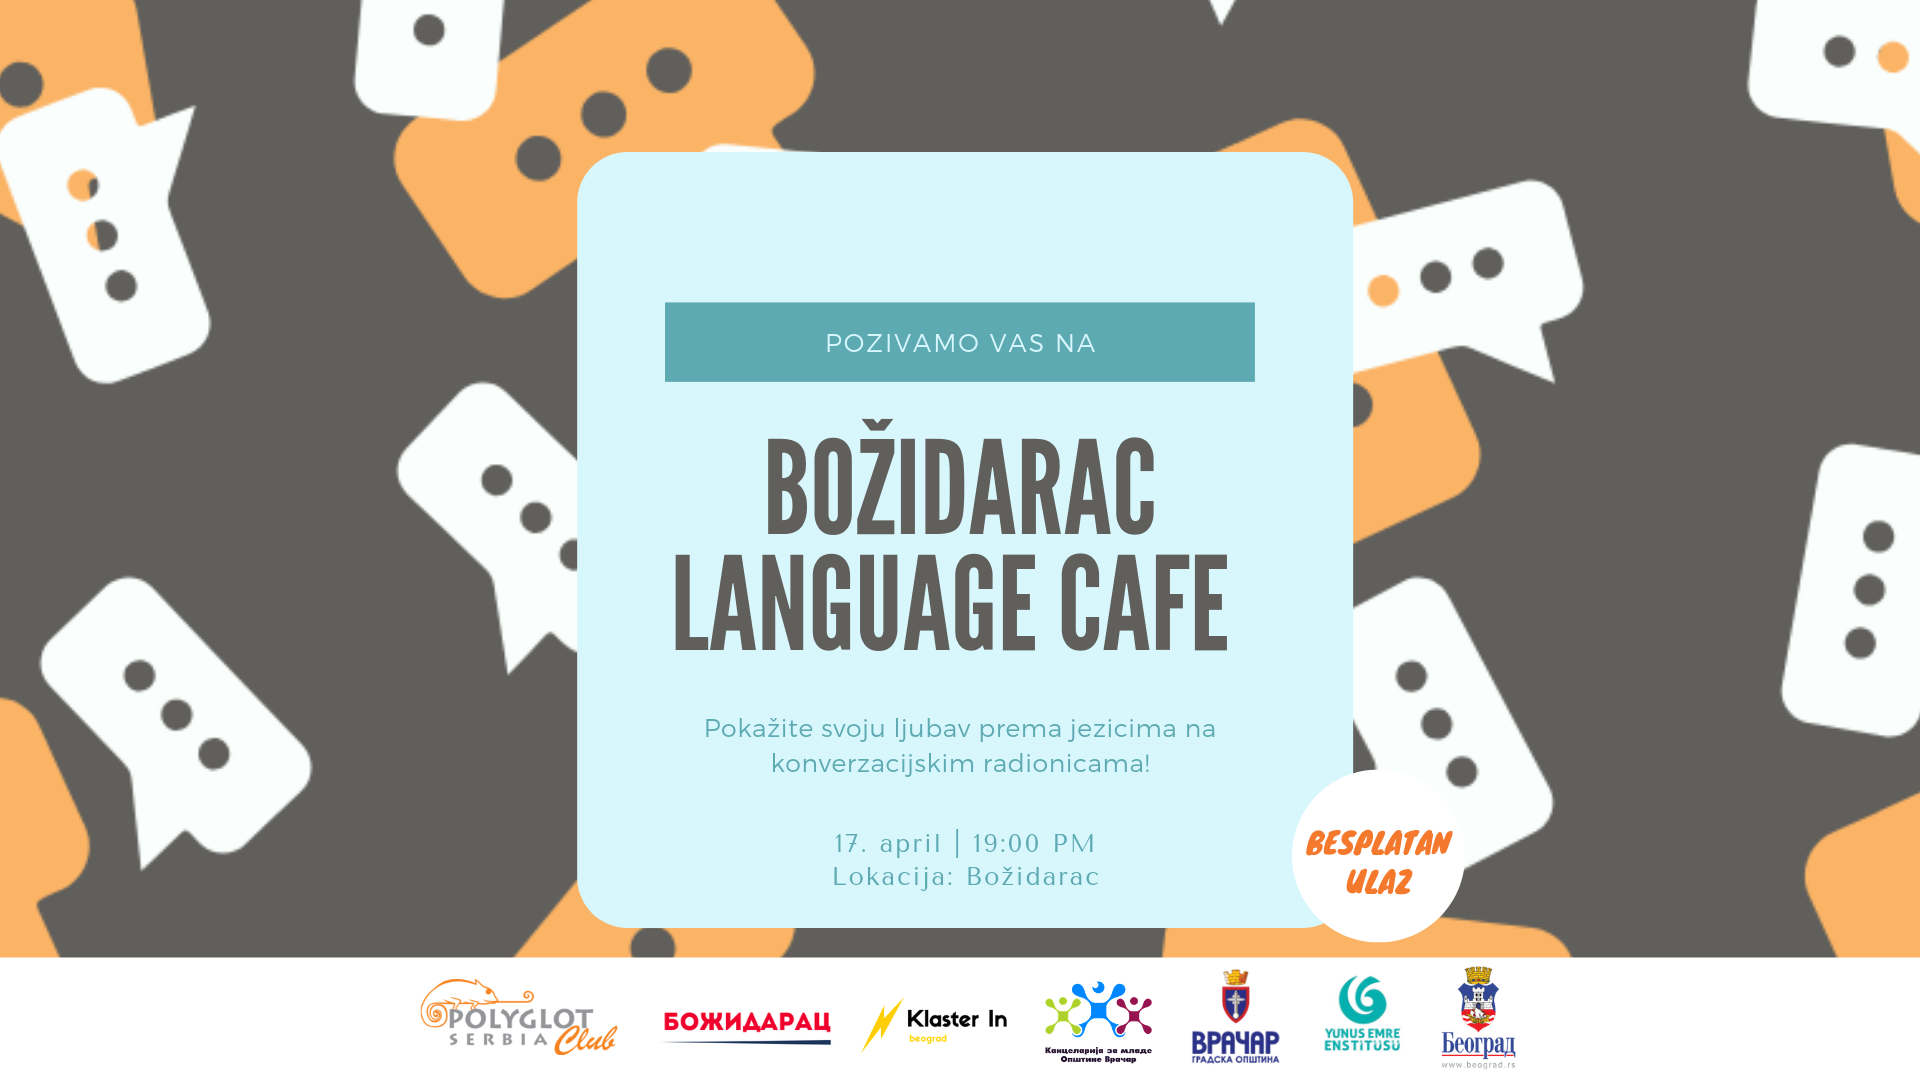 Božidarac Language cafe